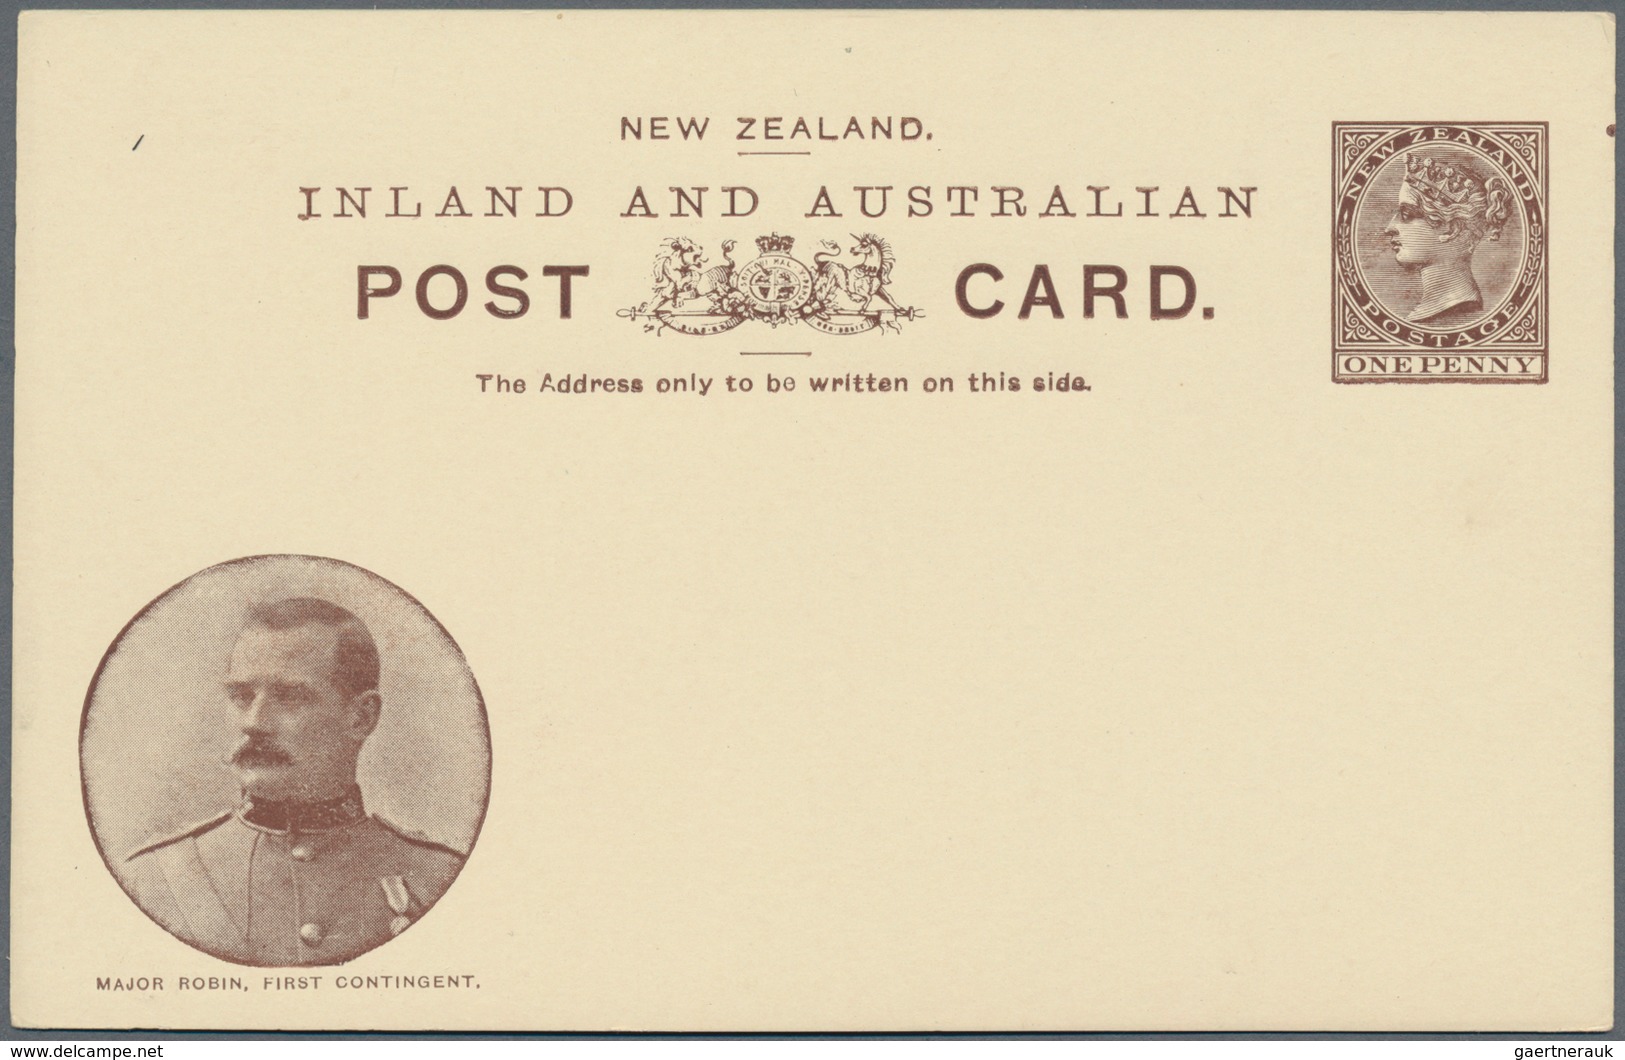 Neuseeland - Ganzsachen: 1901, eight different pictorial stat. postcards QV 1d. brown with Boer War